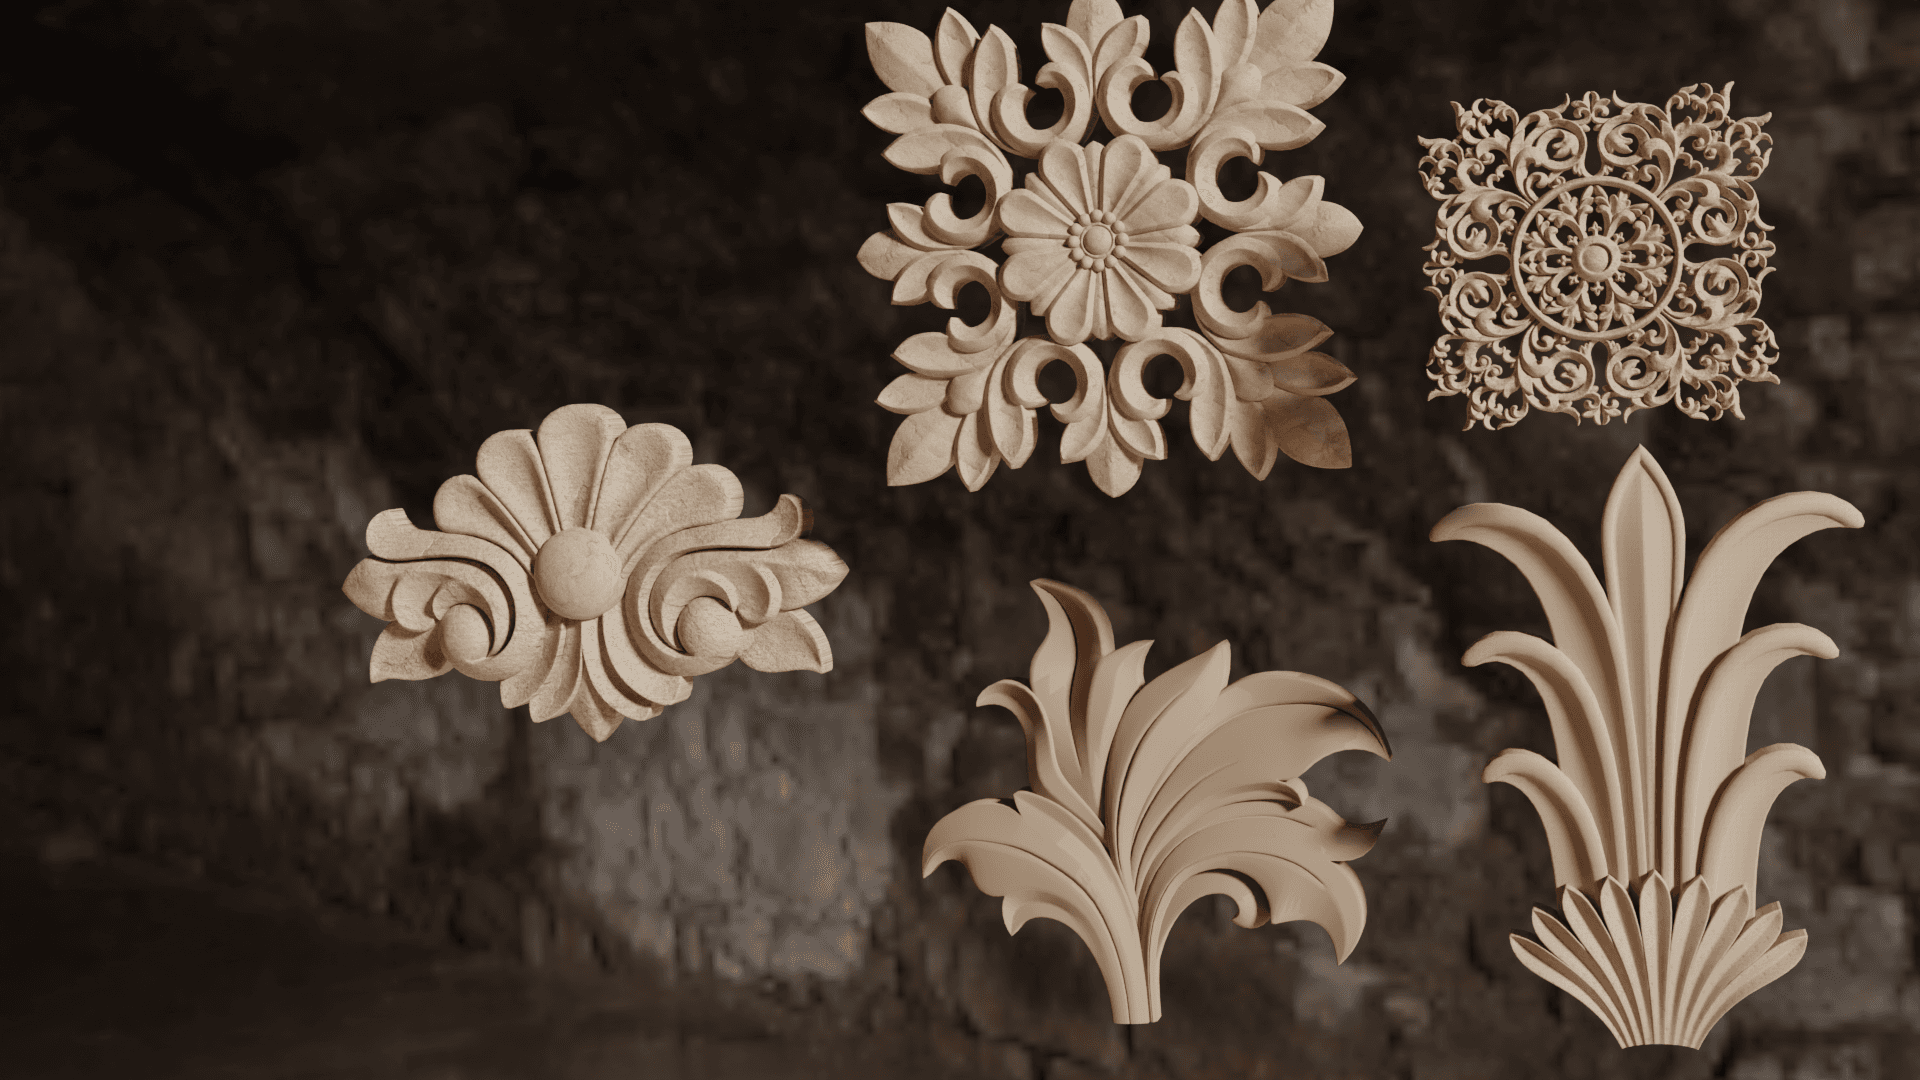 Floral architecture 26 details for 3D print or asset 3d model